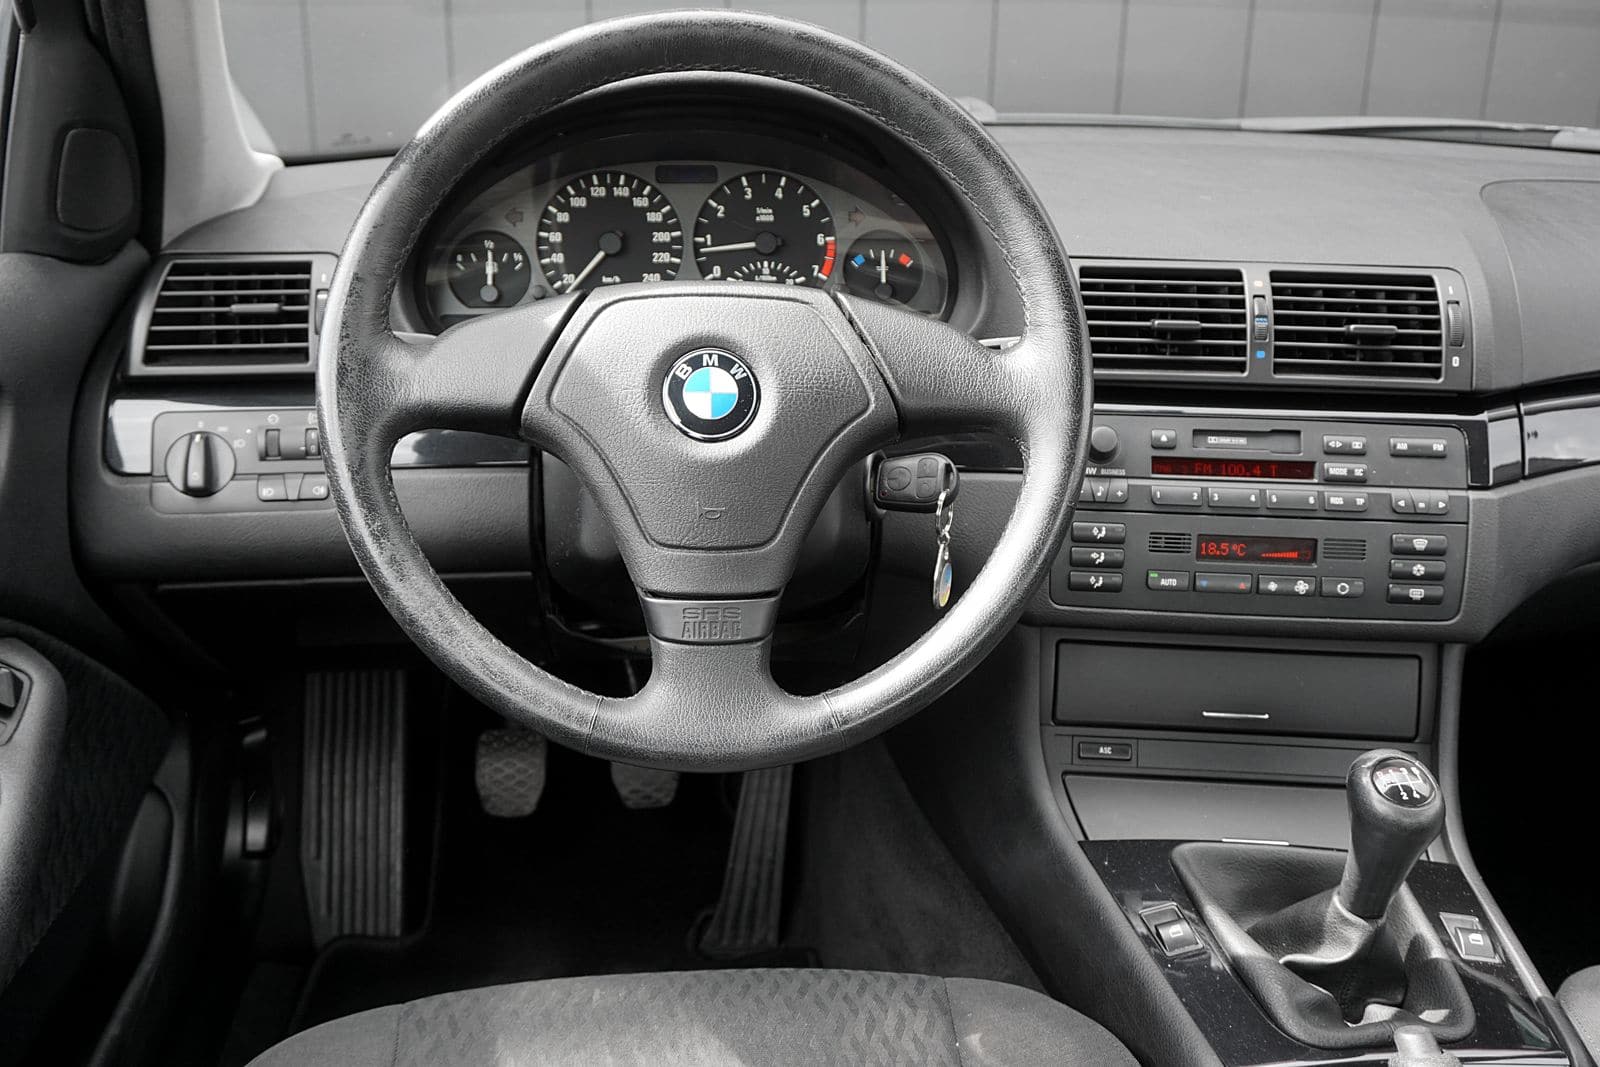 BMW 320i (E46) 2.0 150 Cv état collection Occasion 79 abcautofrance (abc auto france) 16